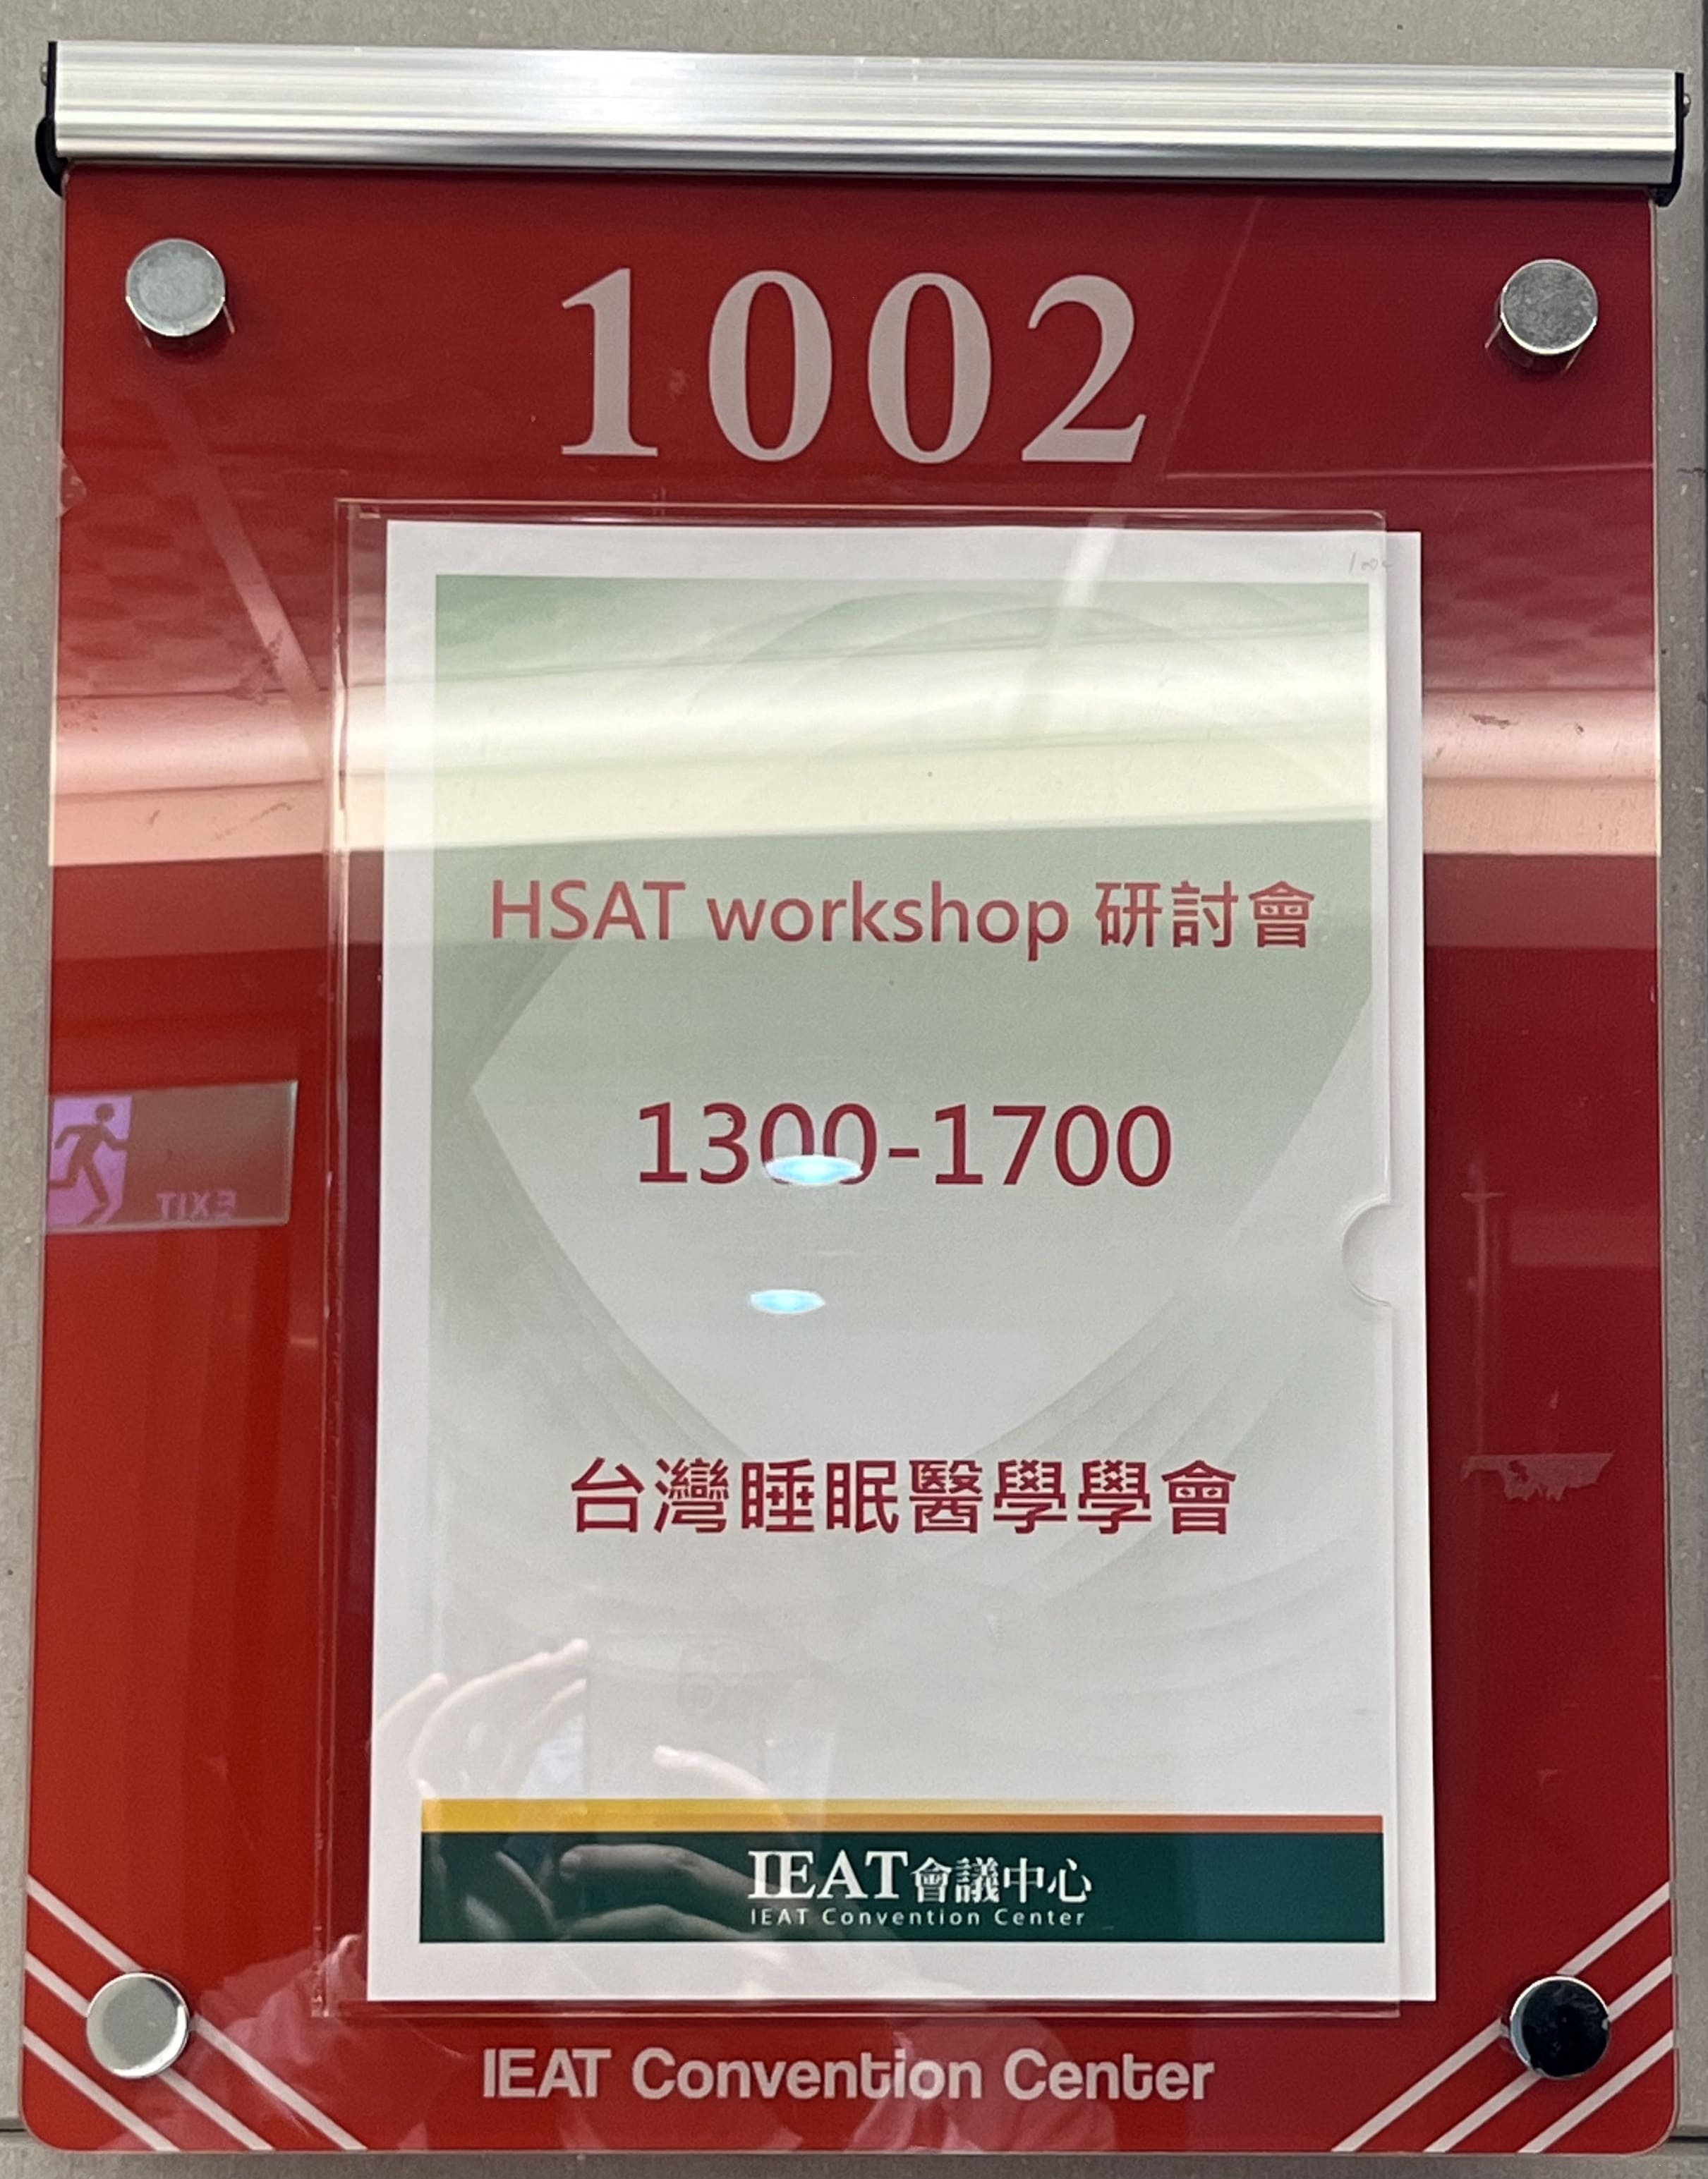 Participate HSAT workshop held by Taiwan Society of  Sleep Medicine(TSSM)